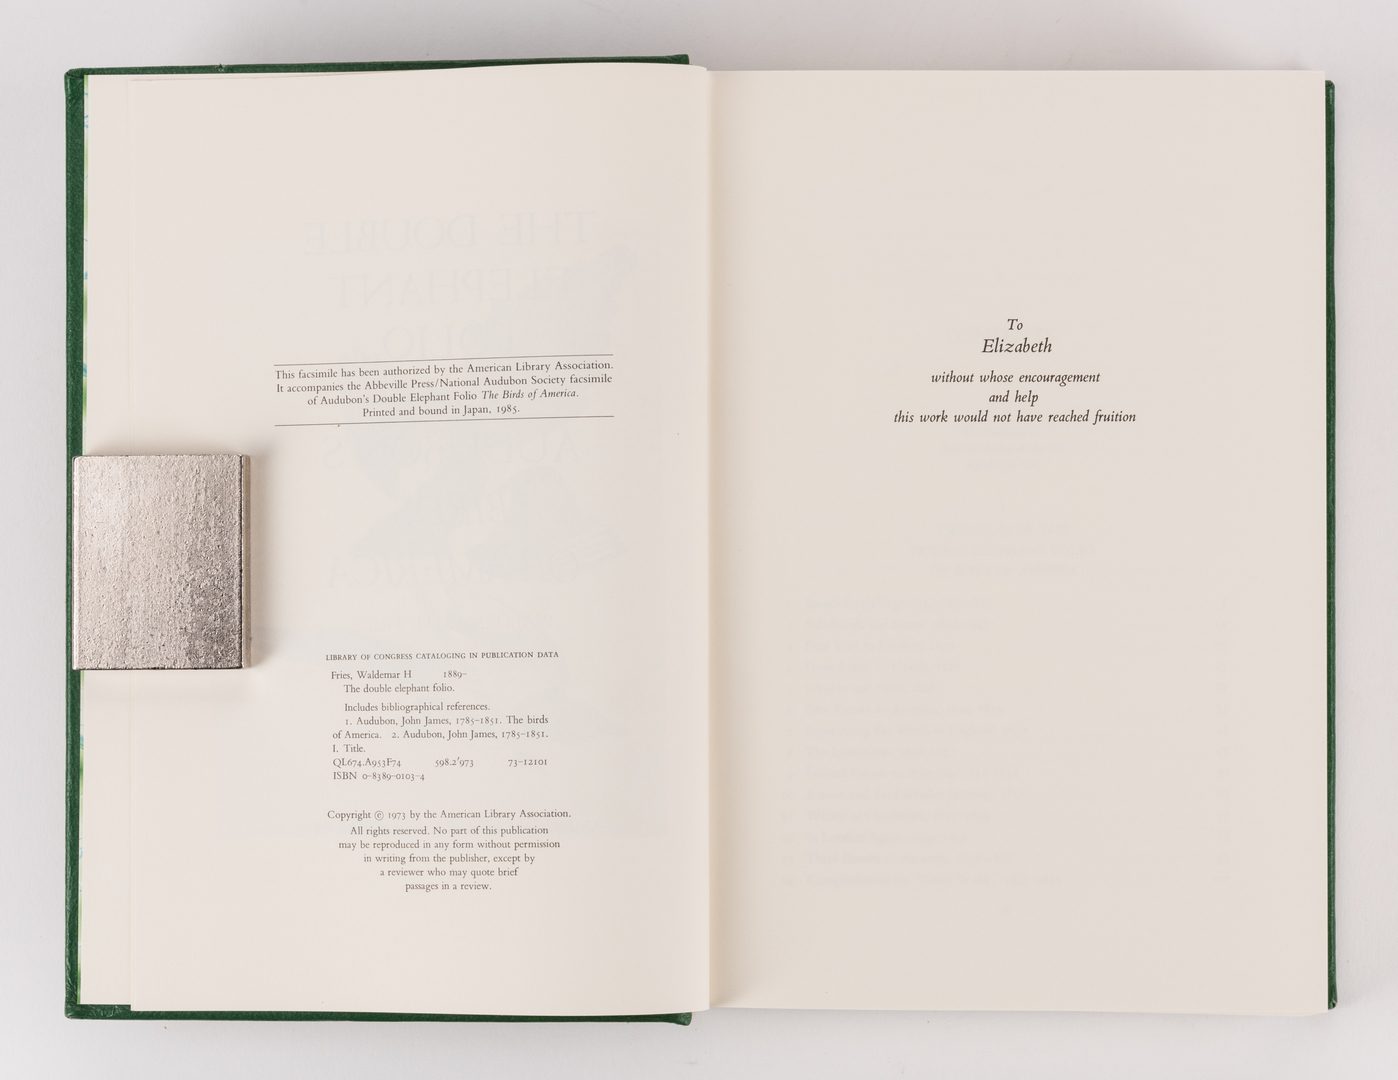 Lot 454: 8 Audubon Books inc. 1846 Quadrupeds Text Vol. 1